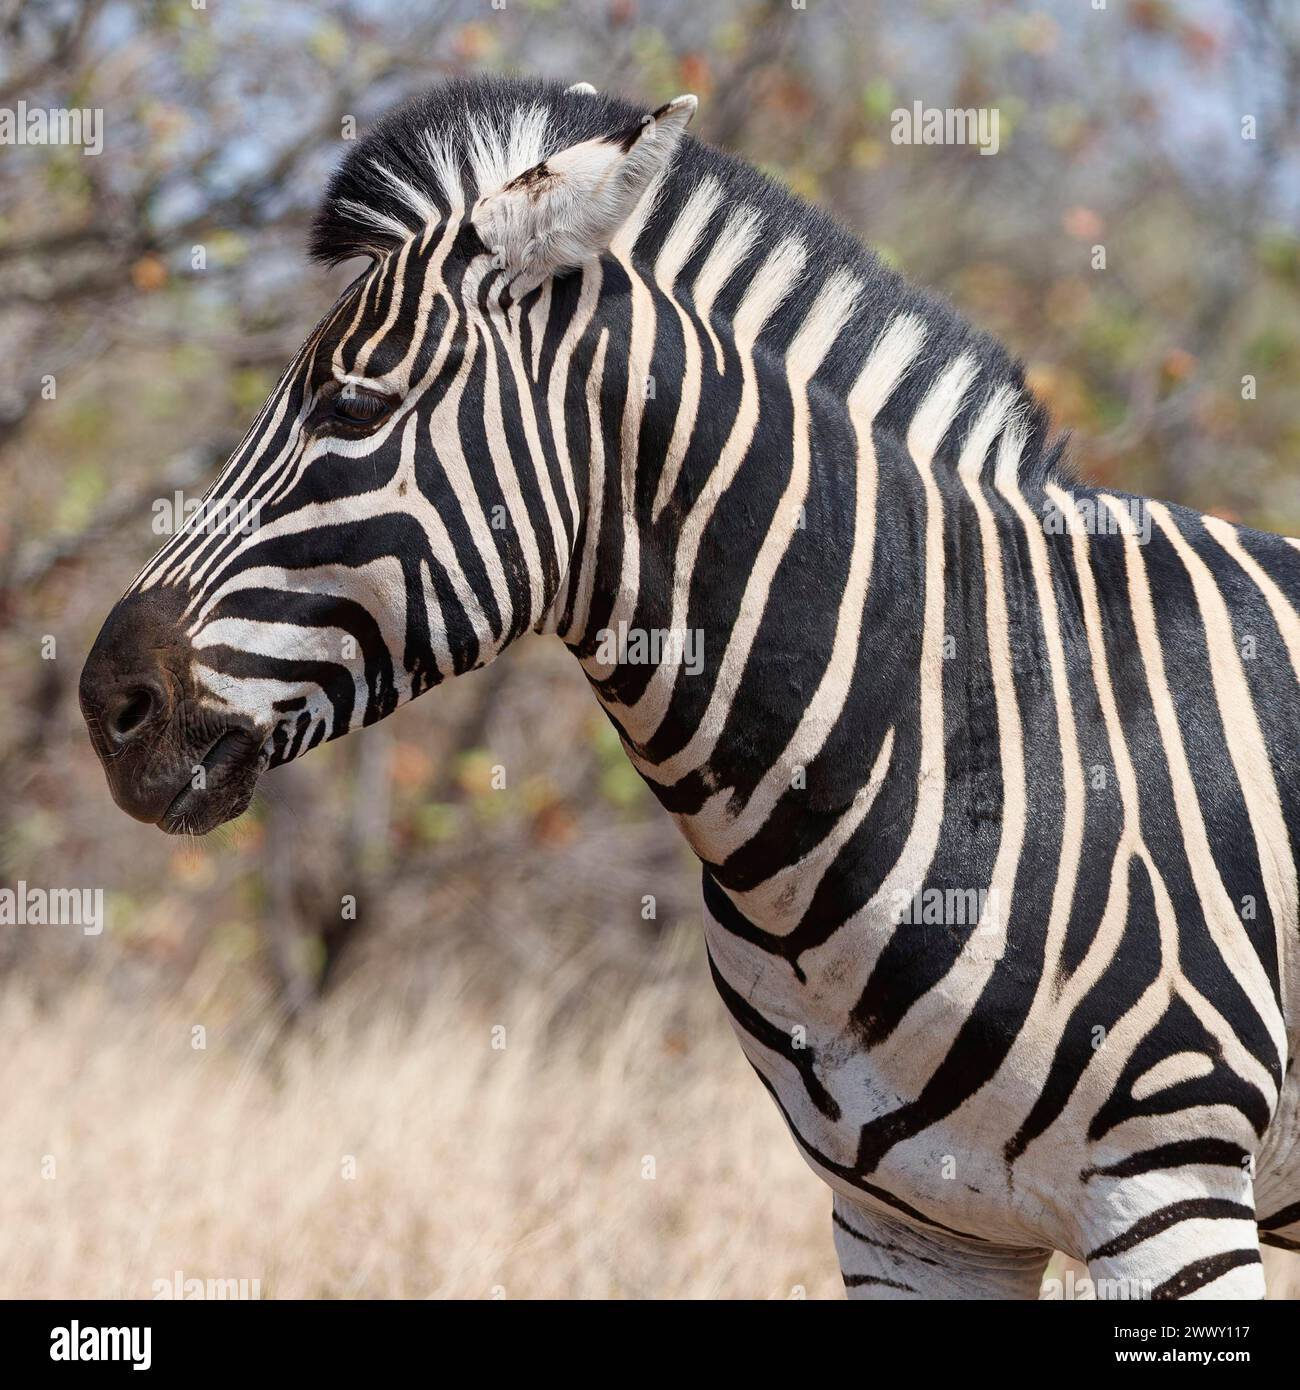 Burchell's Zebra (Equus quagga burchellii), erwachsener Mann im trockenen Gras, Kopfprofil, Tierporträt, Kruger-Nationalpark, Südafrika, Afrika Stockfoto